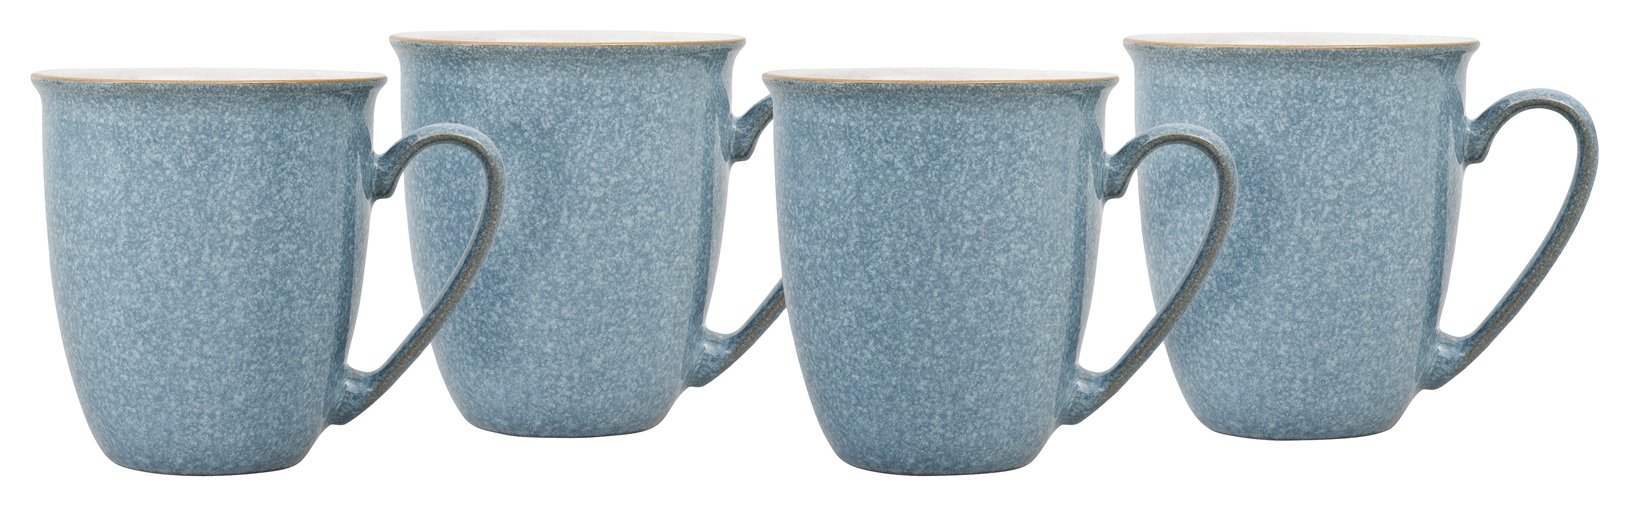 Denby Elements Set of 4 Ceramic Coffee Mugs - Blue